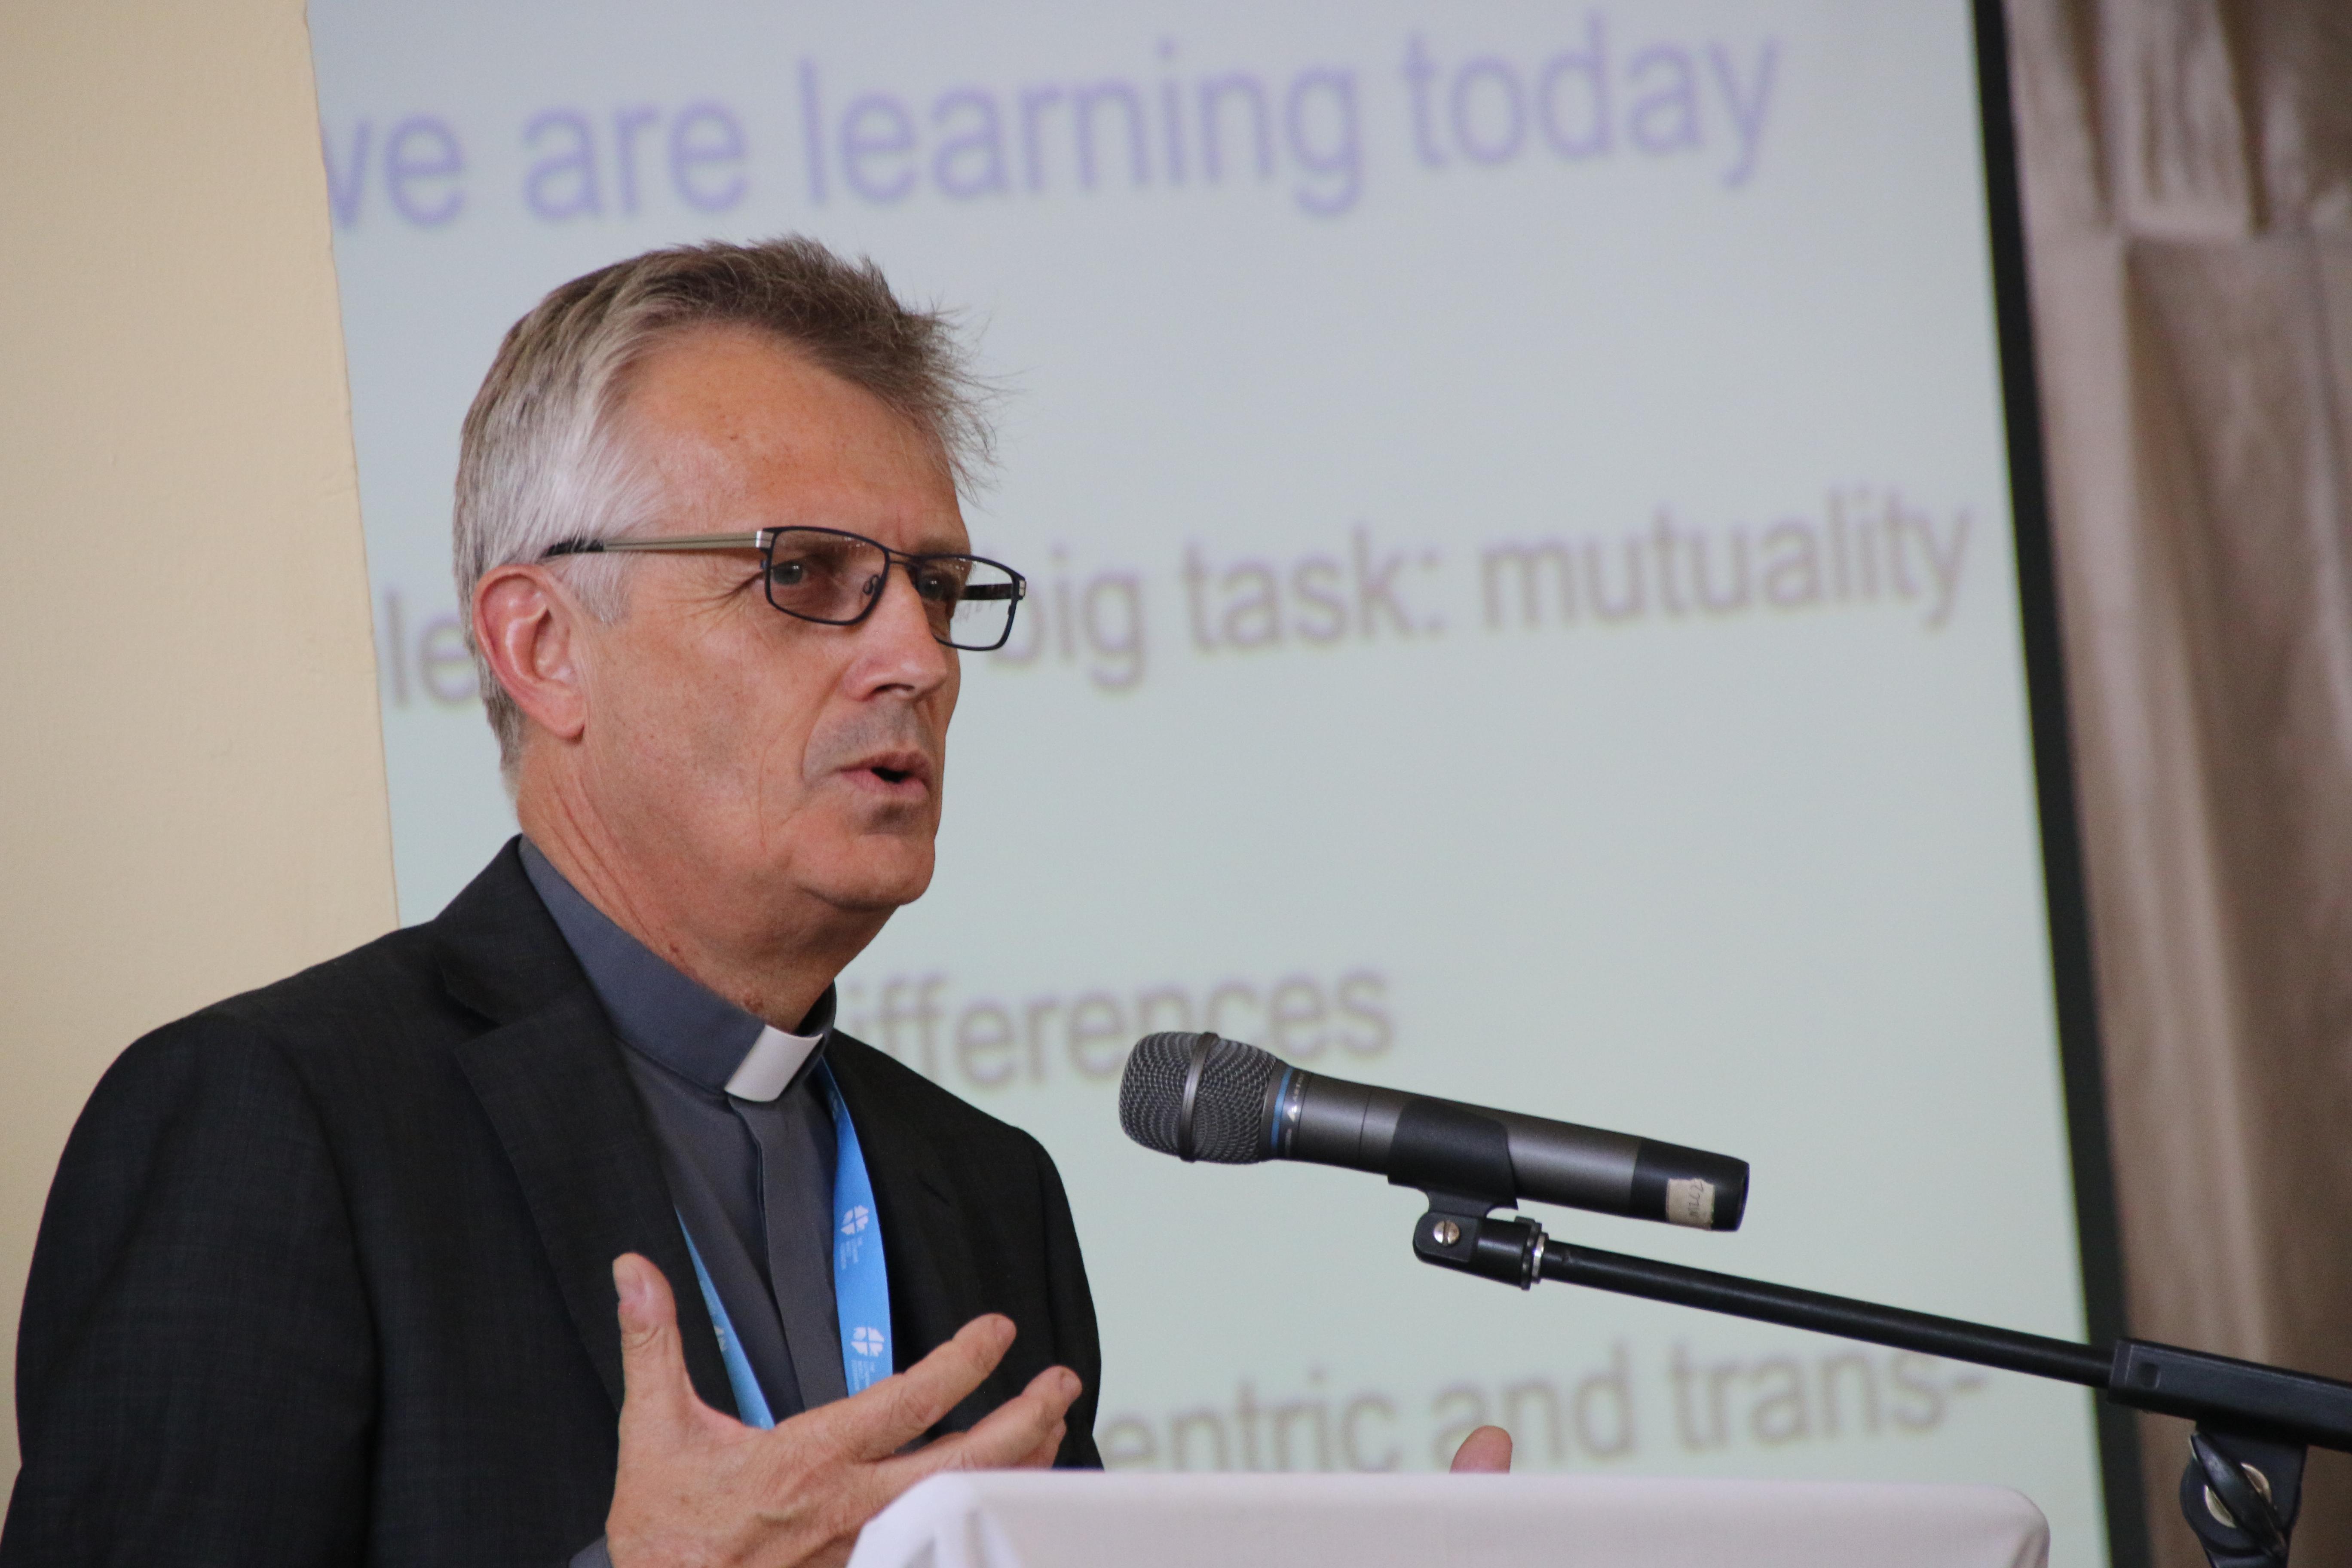 LWF General Secretary Rev. Martin Junge delivers his presentation during the Marangu anniversary conference on 20 May 2015. LWF/Tsion Alemayehu